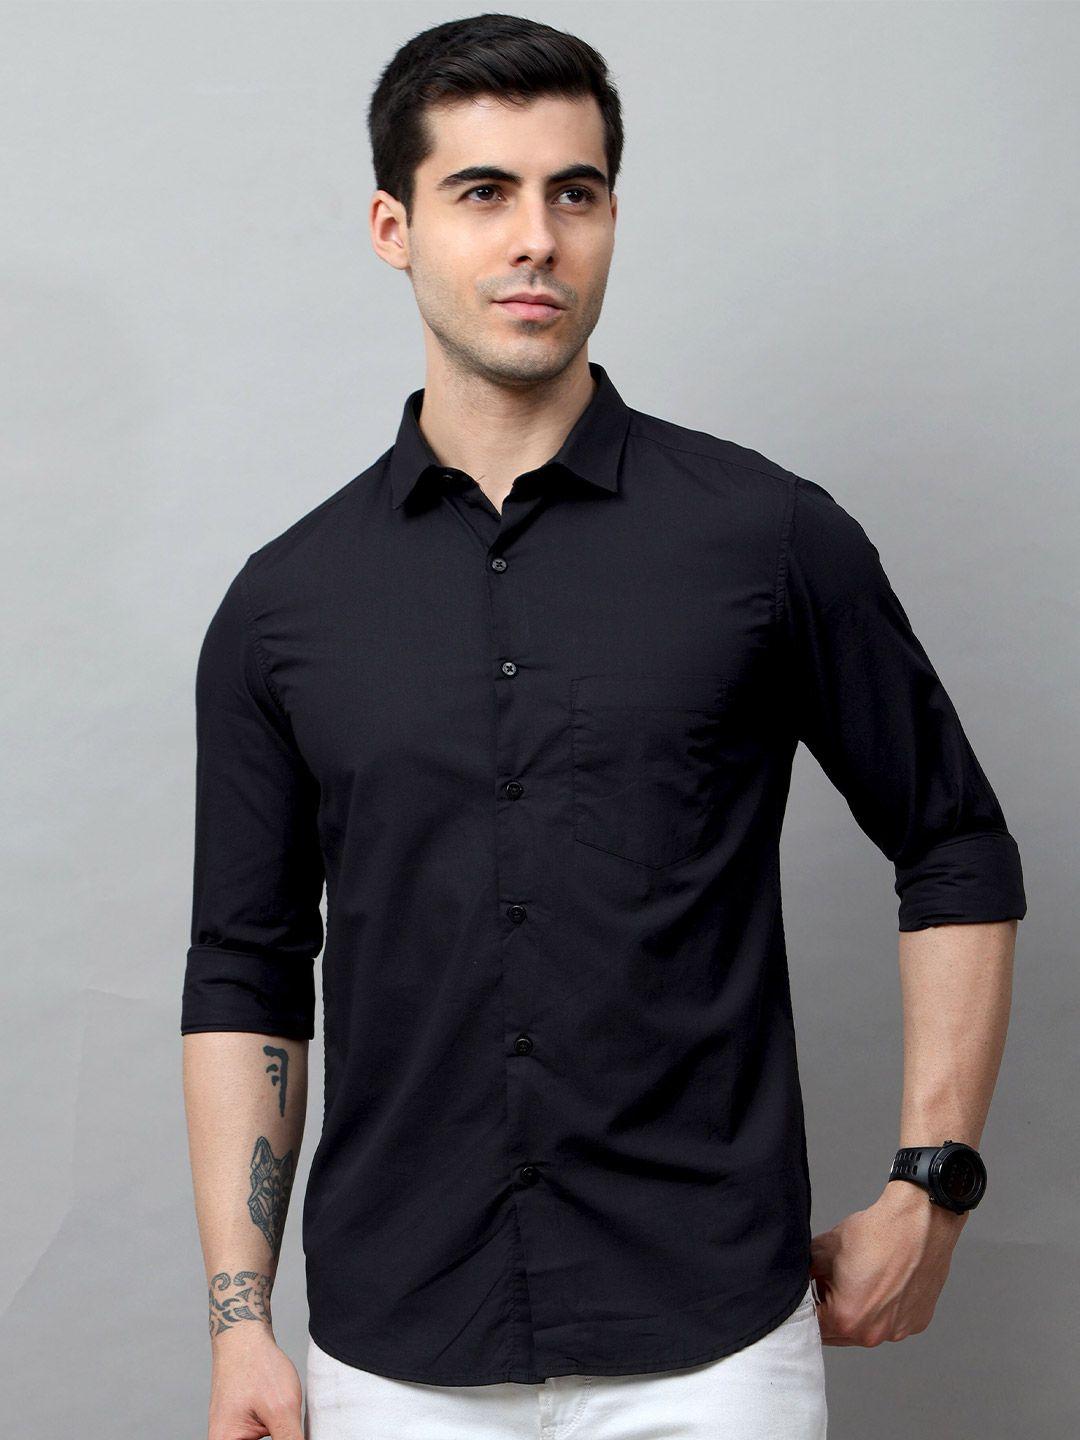 bushirt men black solid pure cotton comfort casual shirt